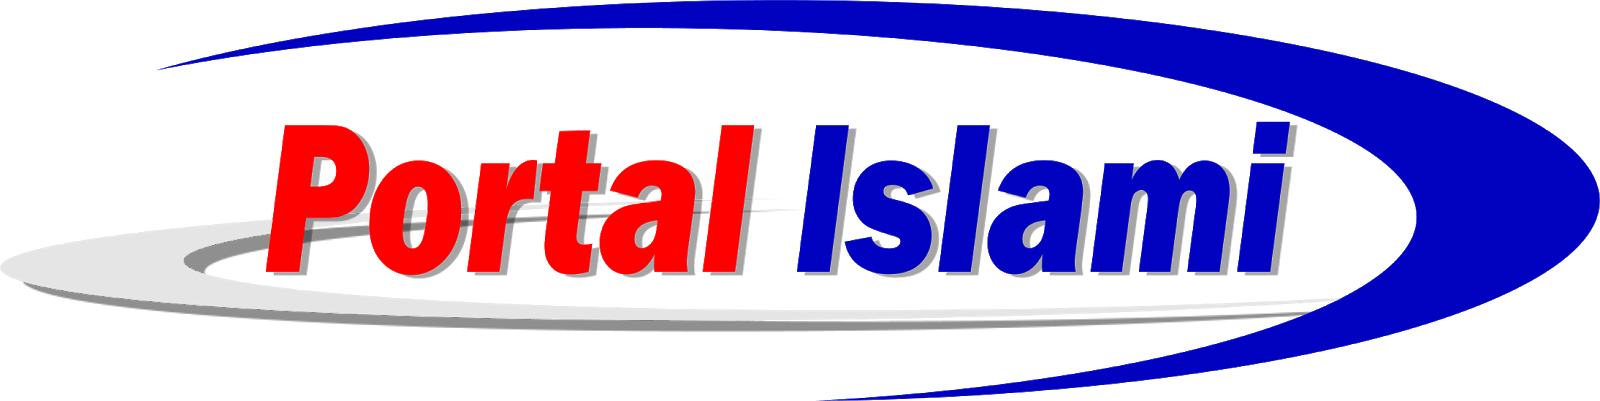 Portal Islami